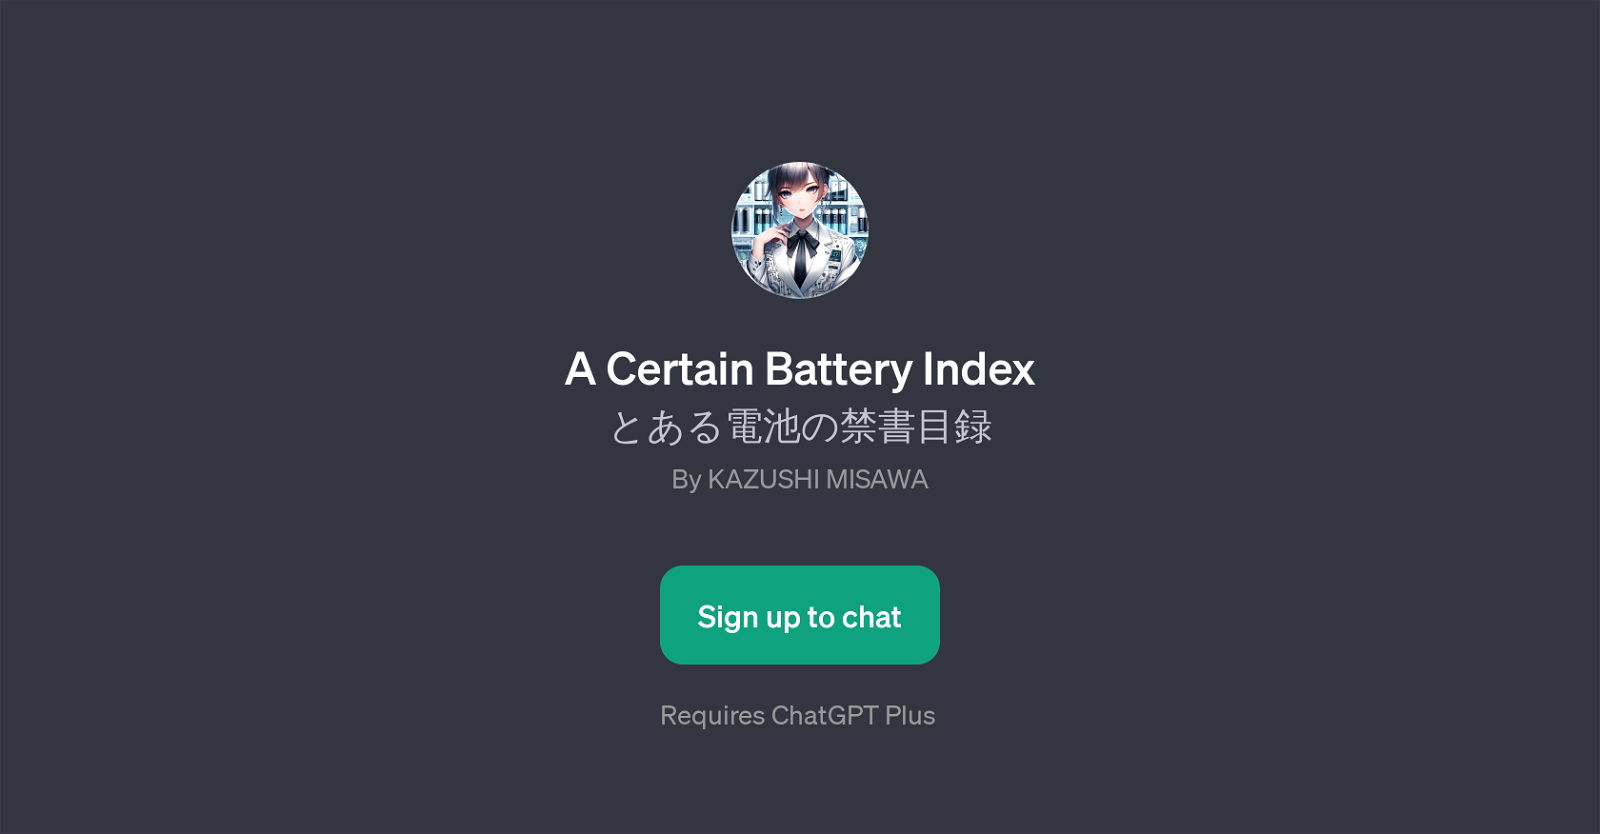 A Certain Battery Index website